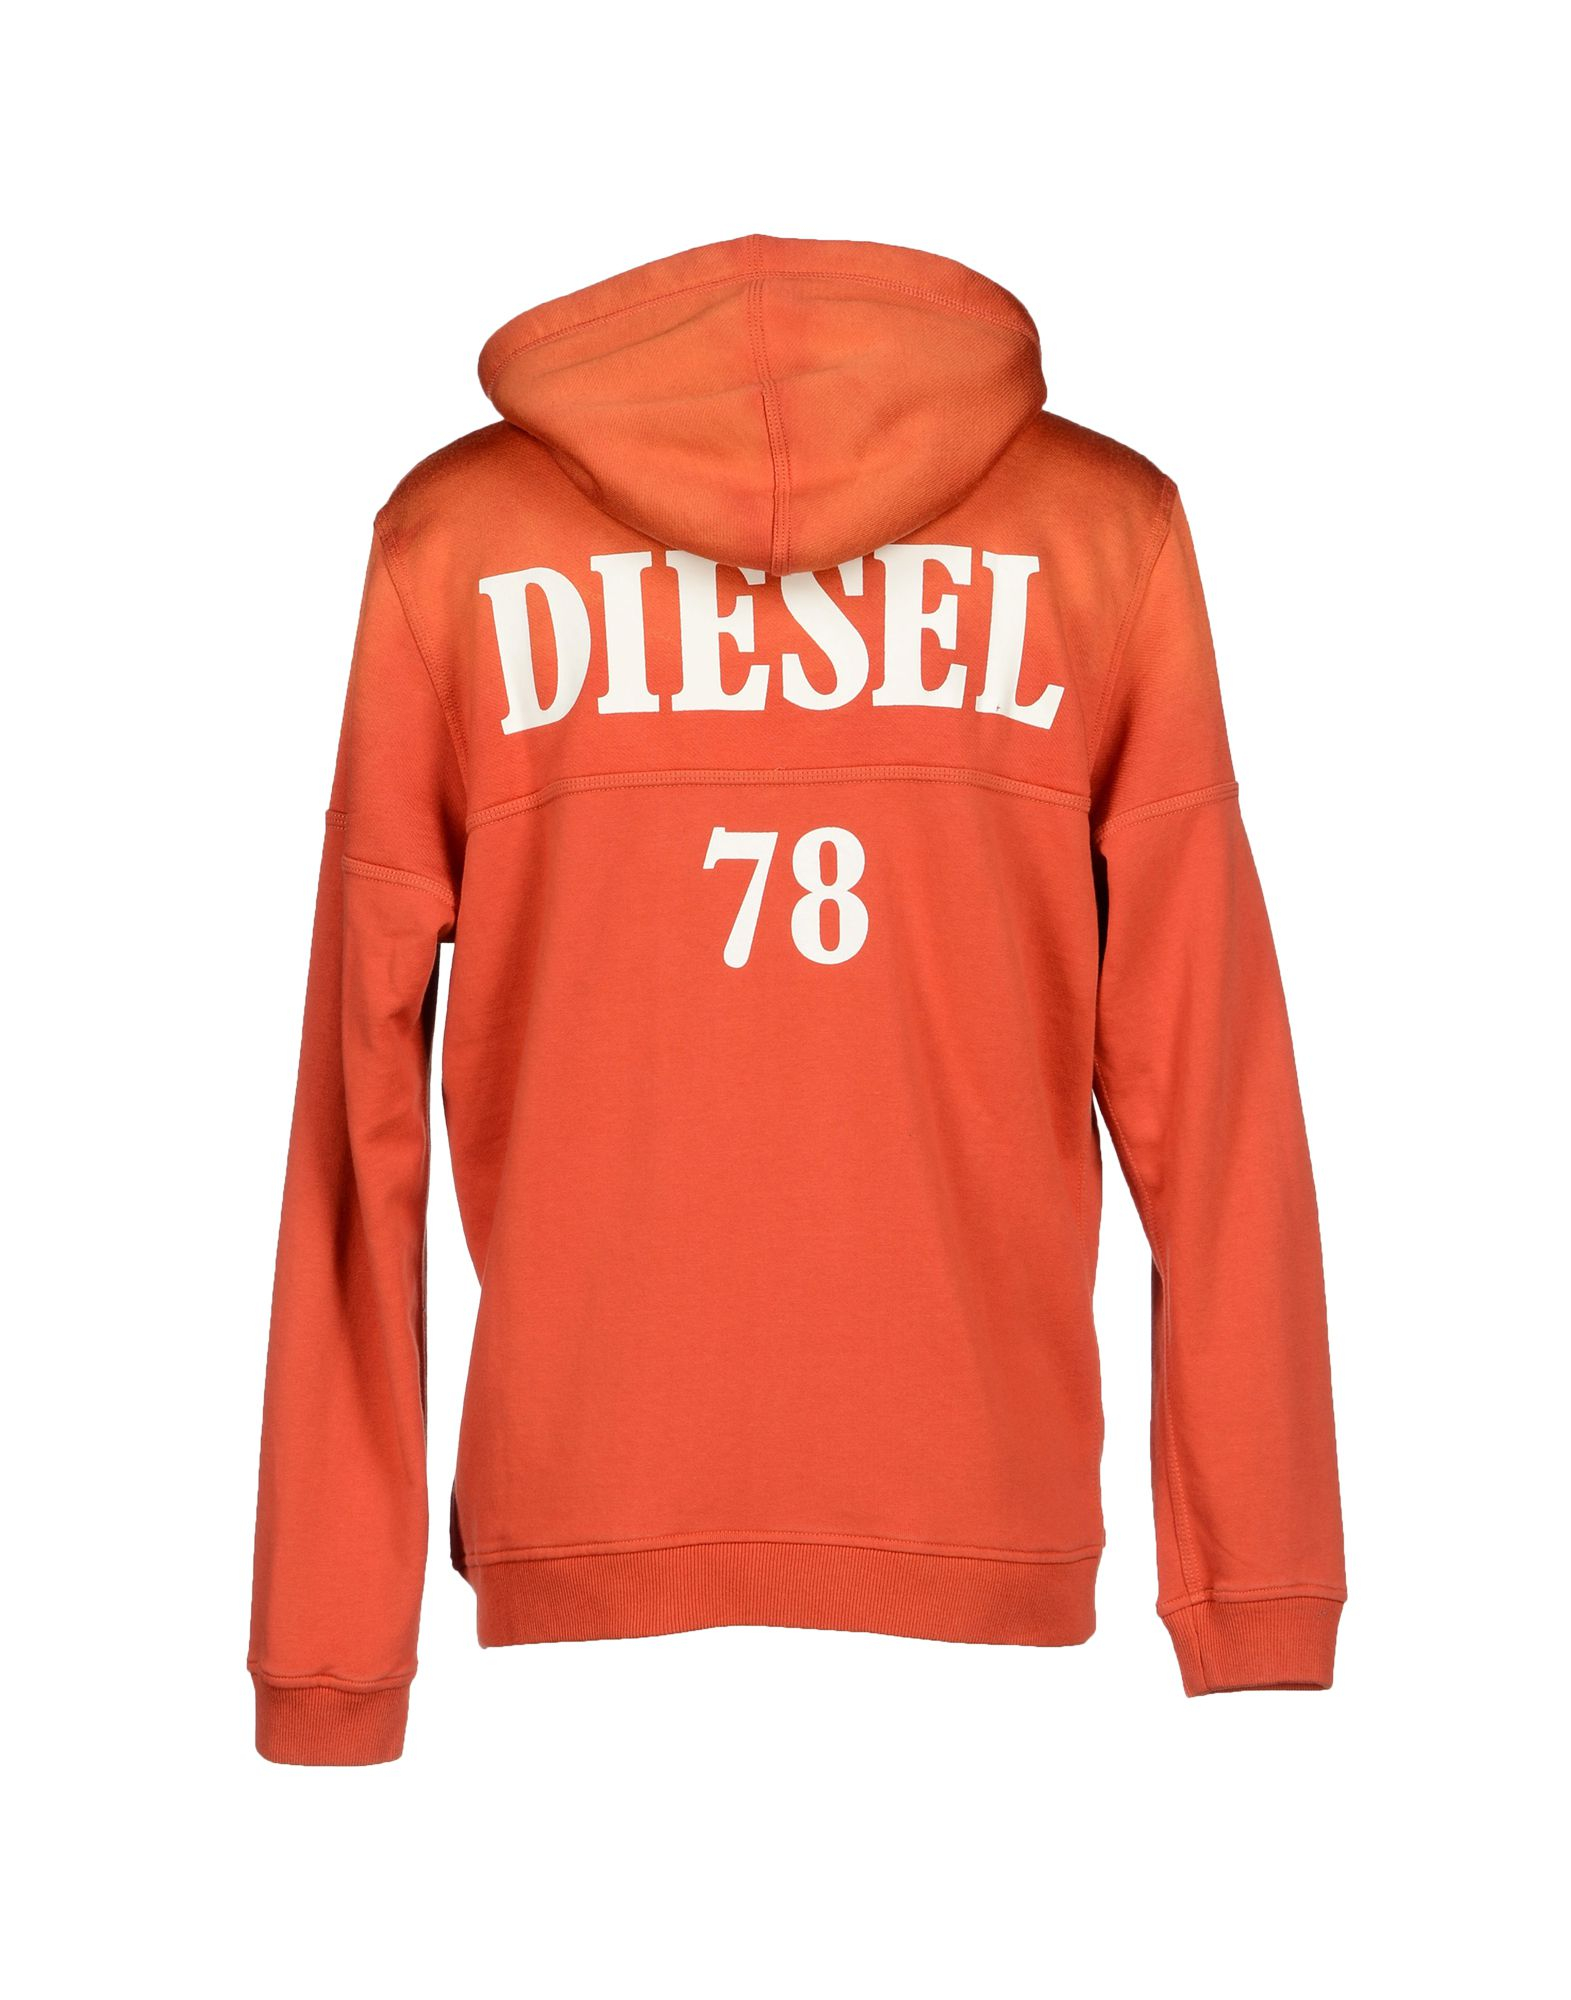 DIESEL Sweatshirt in Orange for Men - Lyst